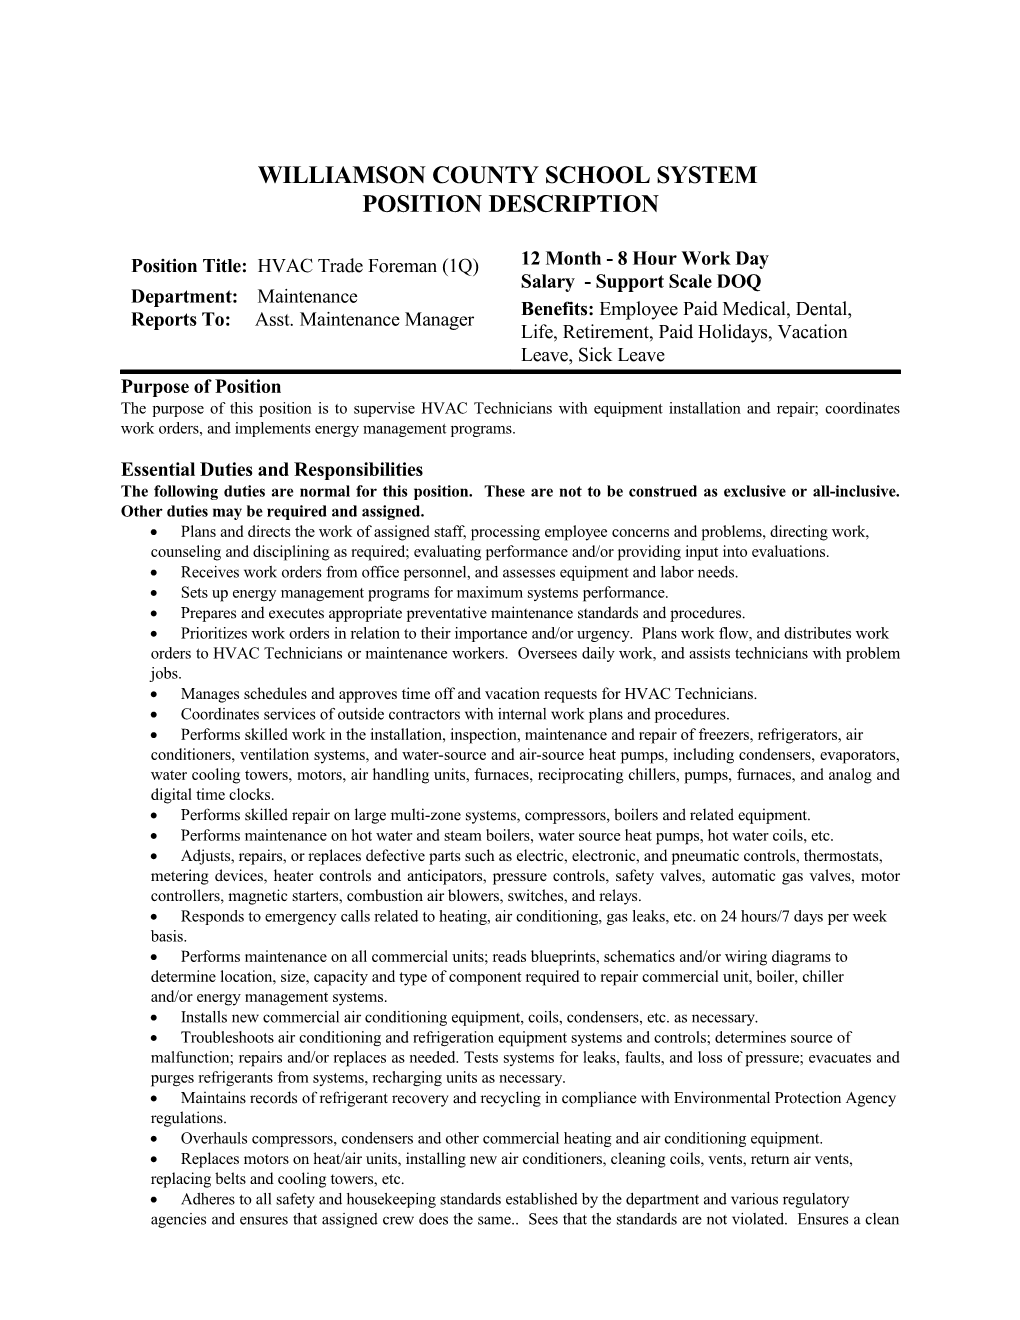 HVAC Trade Foreman Williamson